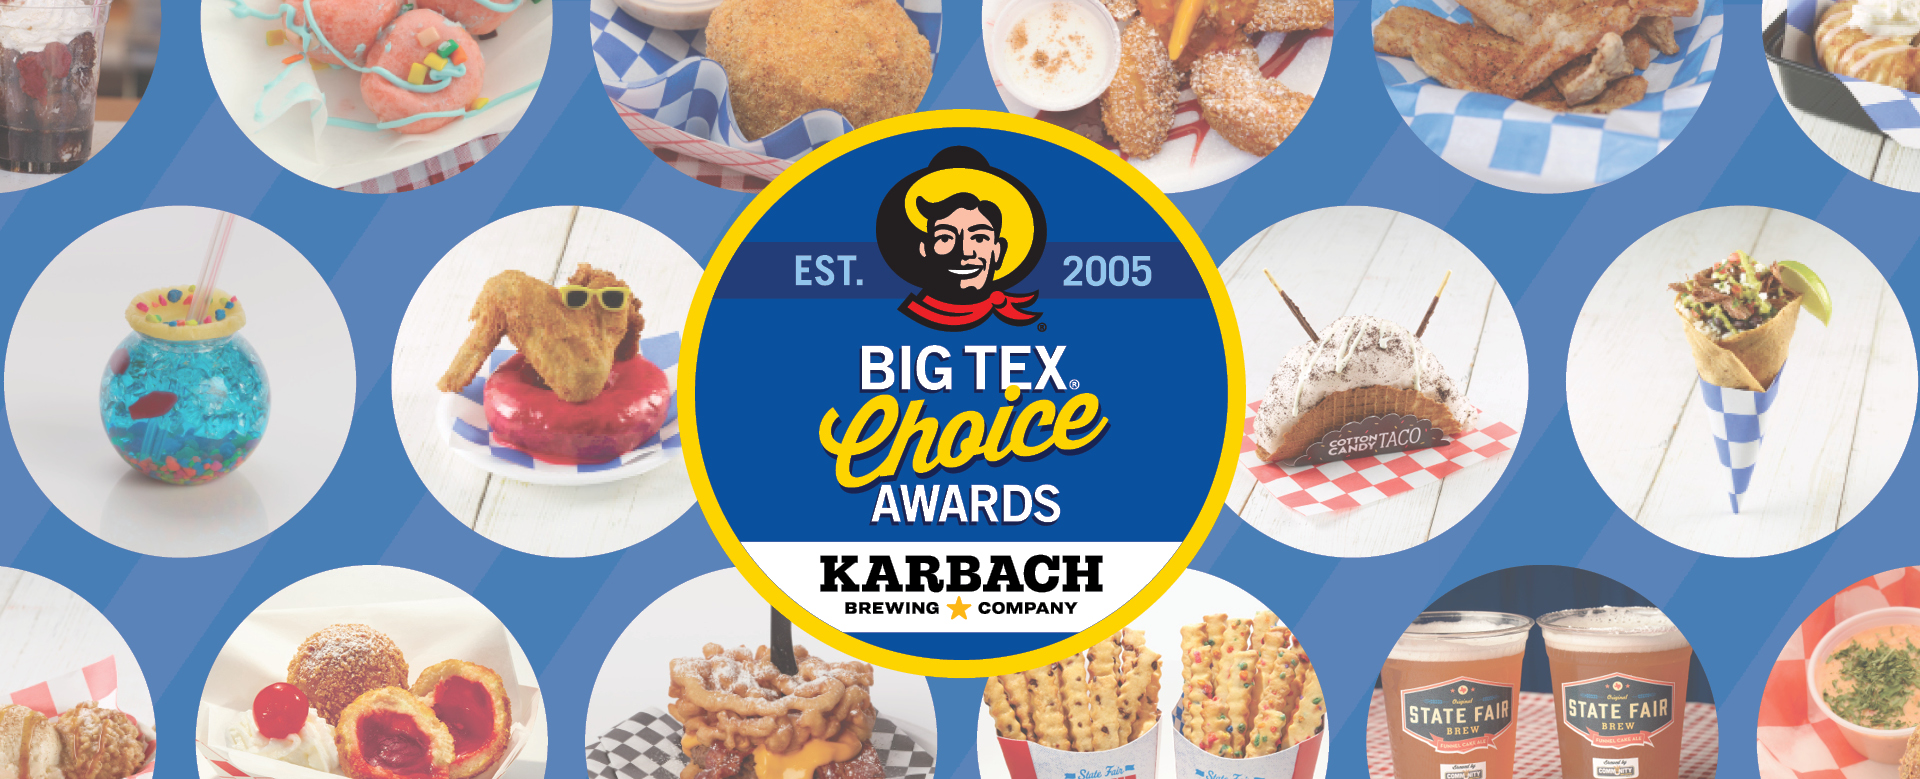 State Fair of Texas announces 2022 Big Tex Choice Awards food